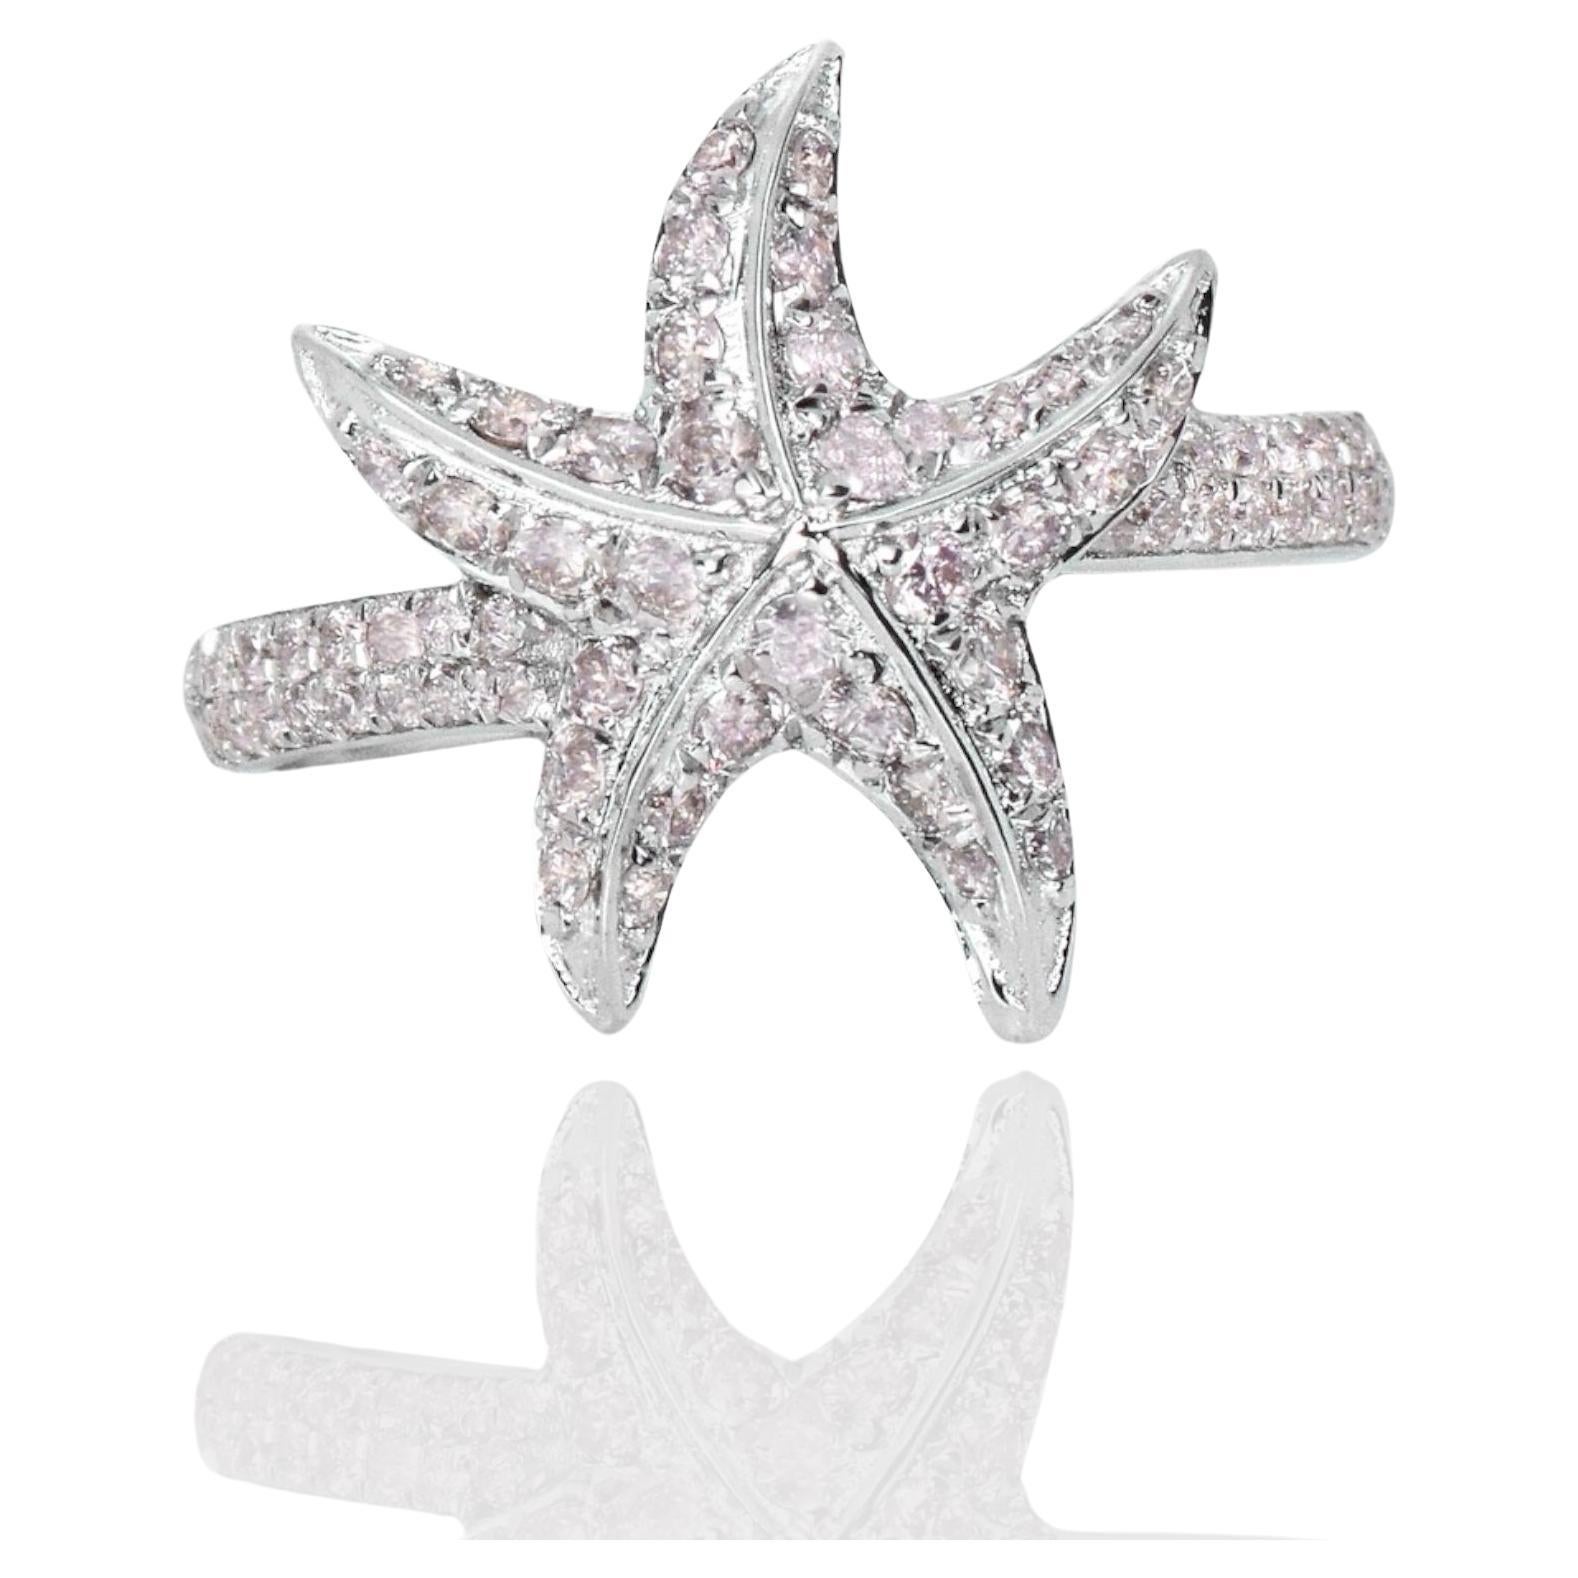 IGI 14K 0.58 ct Natural Pink Diamonds Sea Star Design Antique Art Deco Ring For Sale